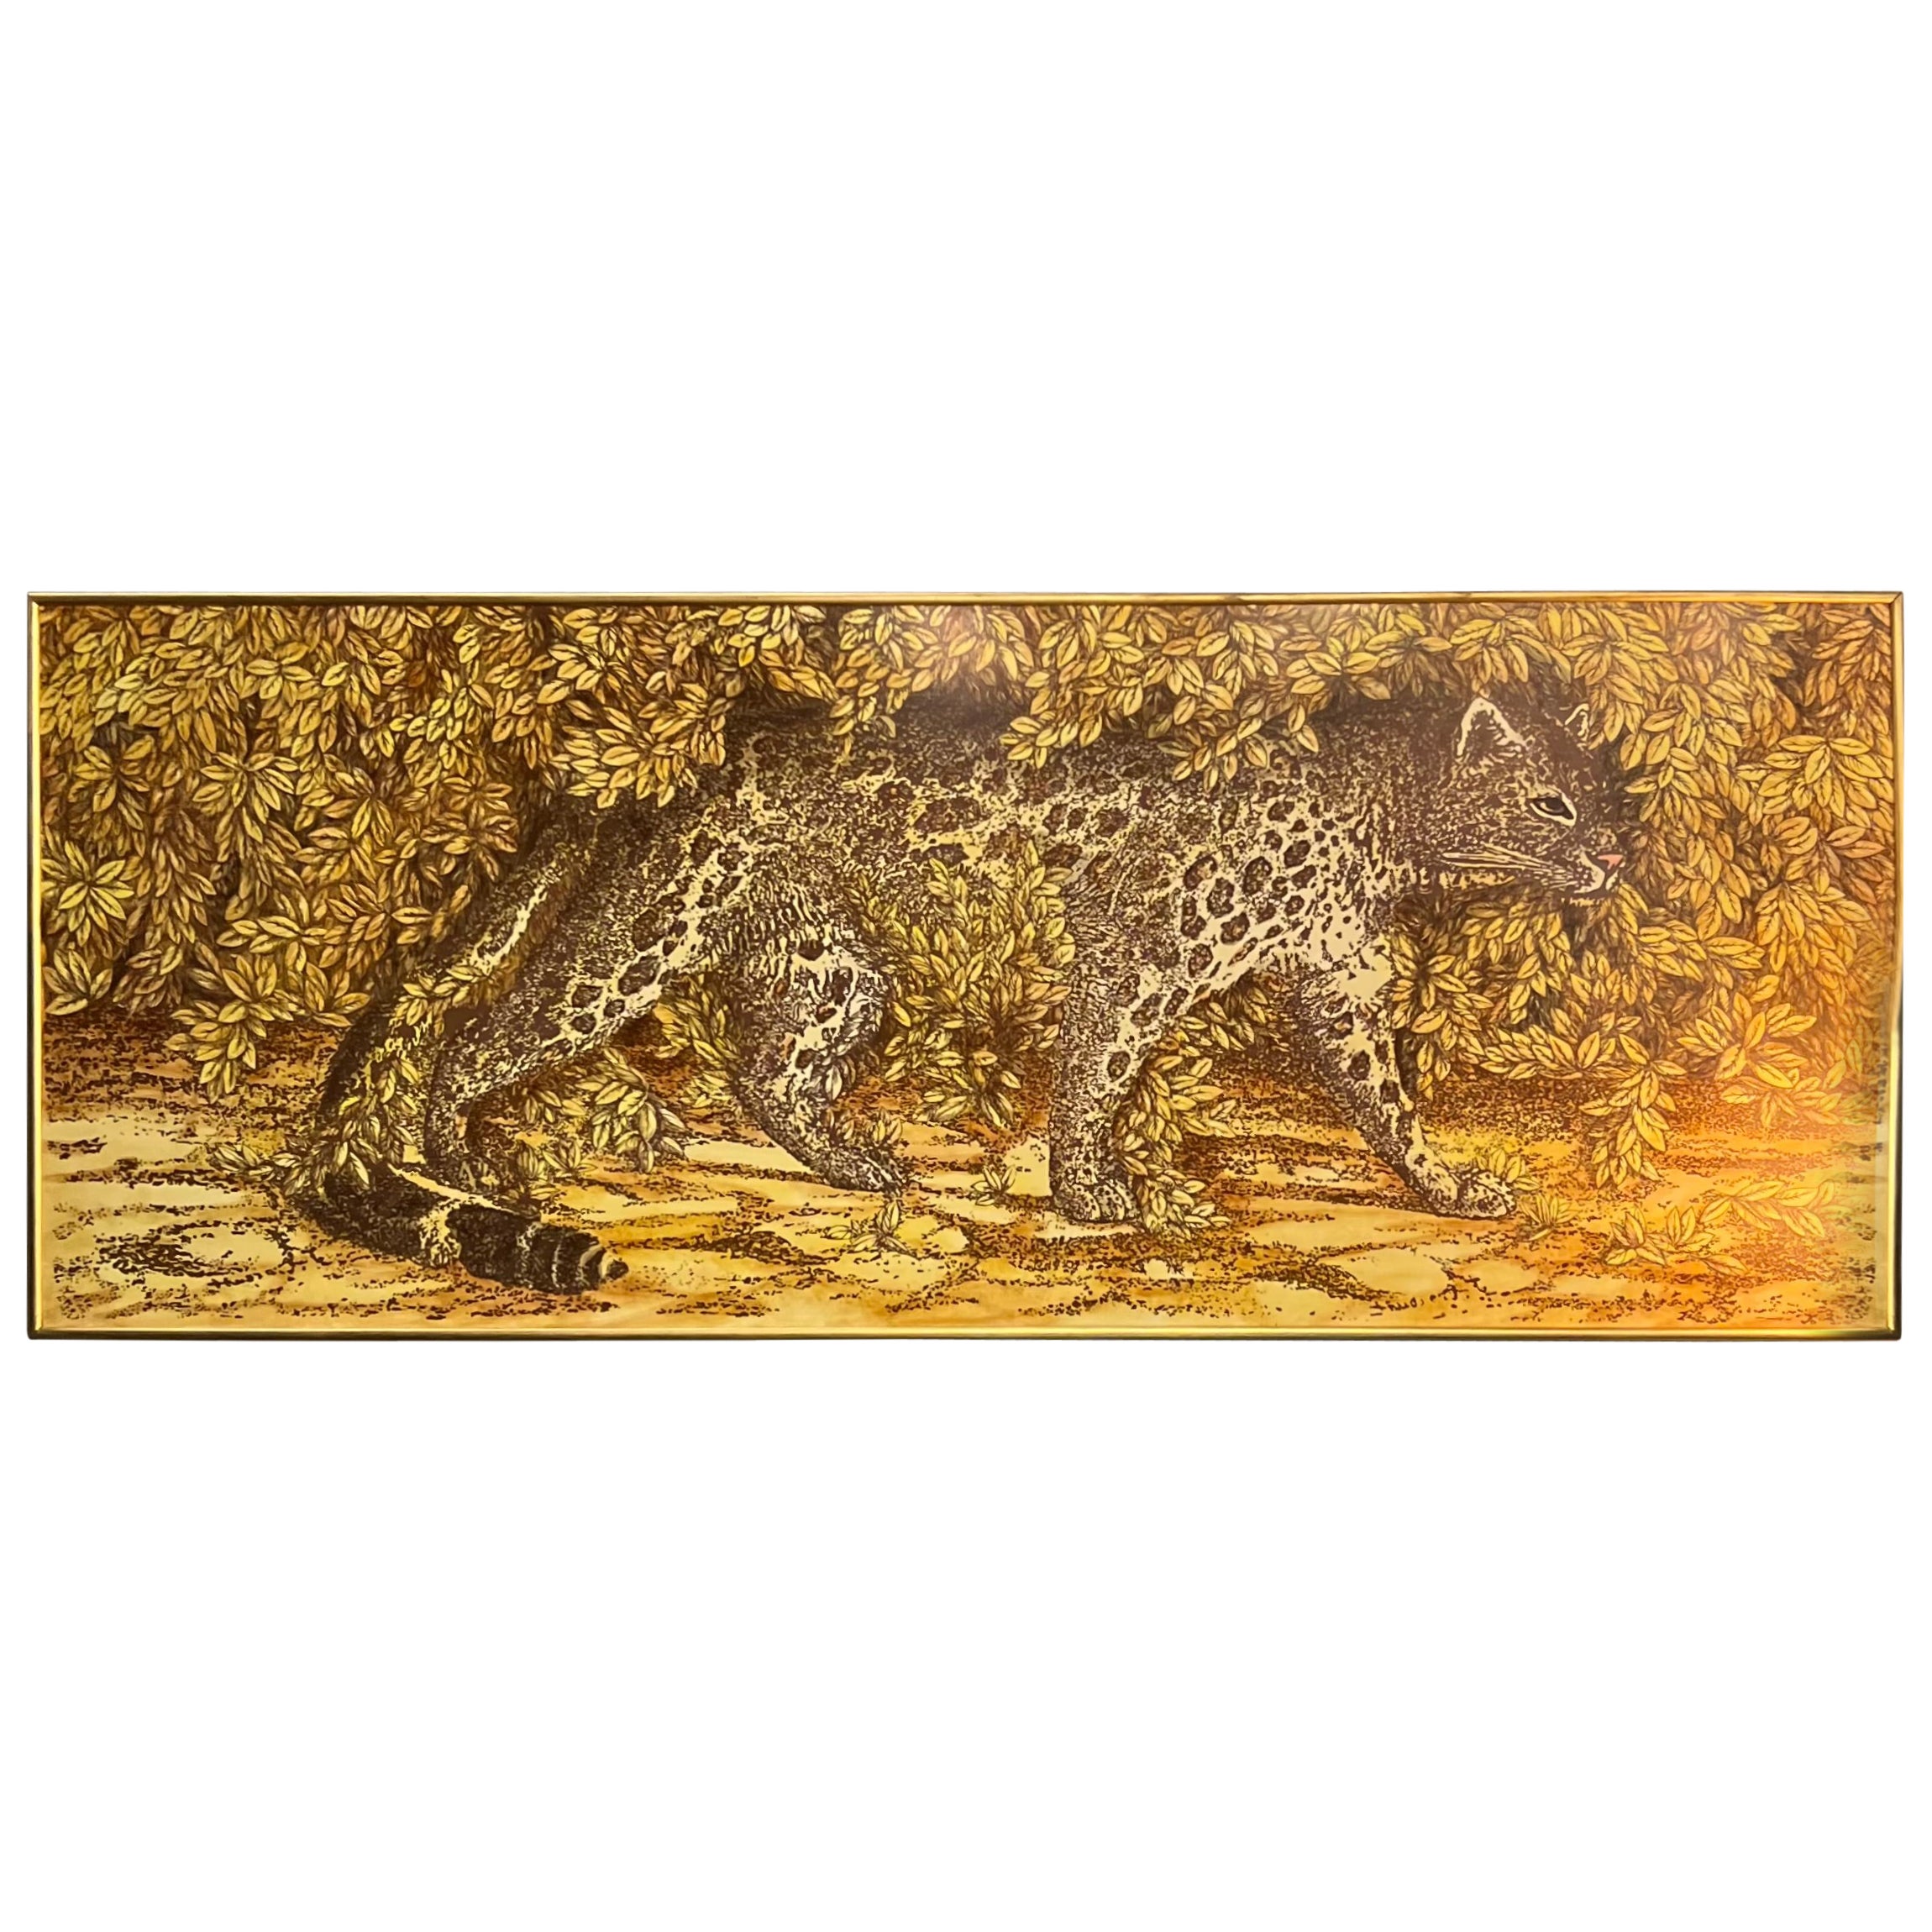 Fornasetti Leopardo-Tafel, handbemalt, Italien, 21. Jahrhundert 